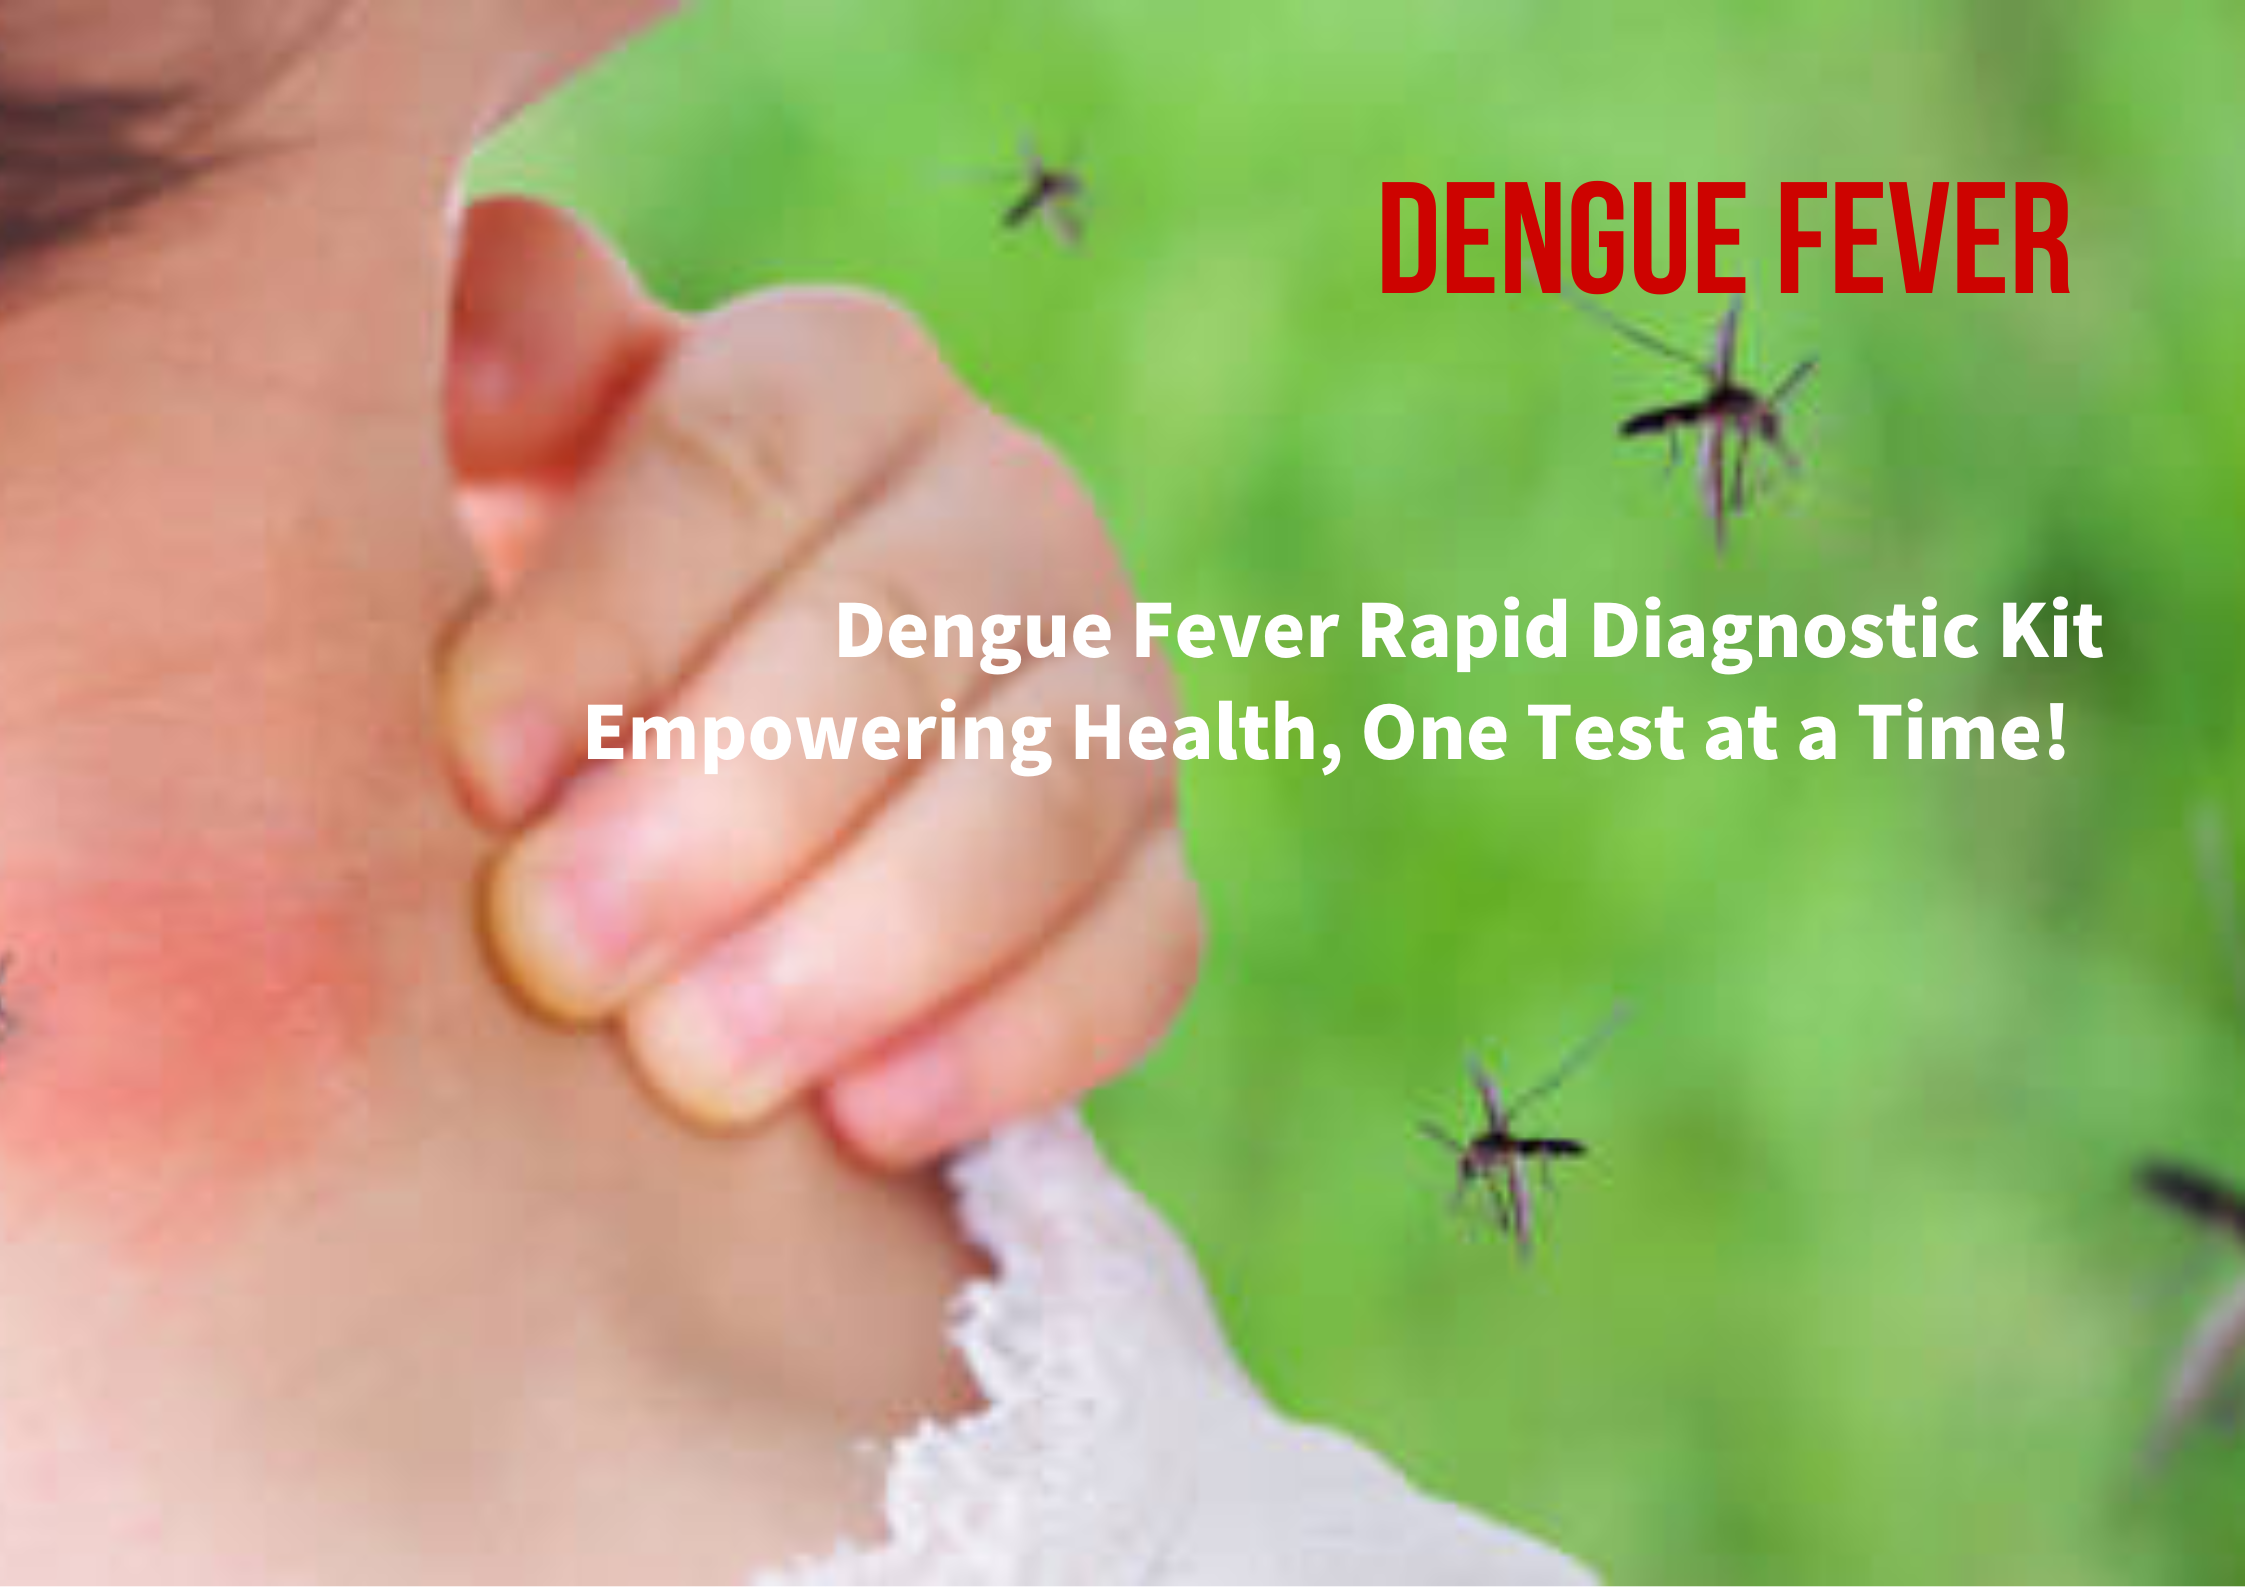 Dengue Fever Rapid Diagnostic Kit: Ден соолукту чыңдоо, бир убакта бир сыноо!